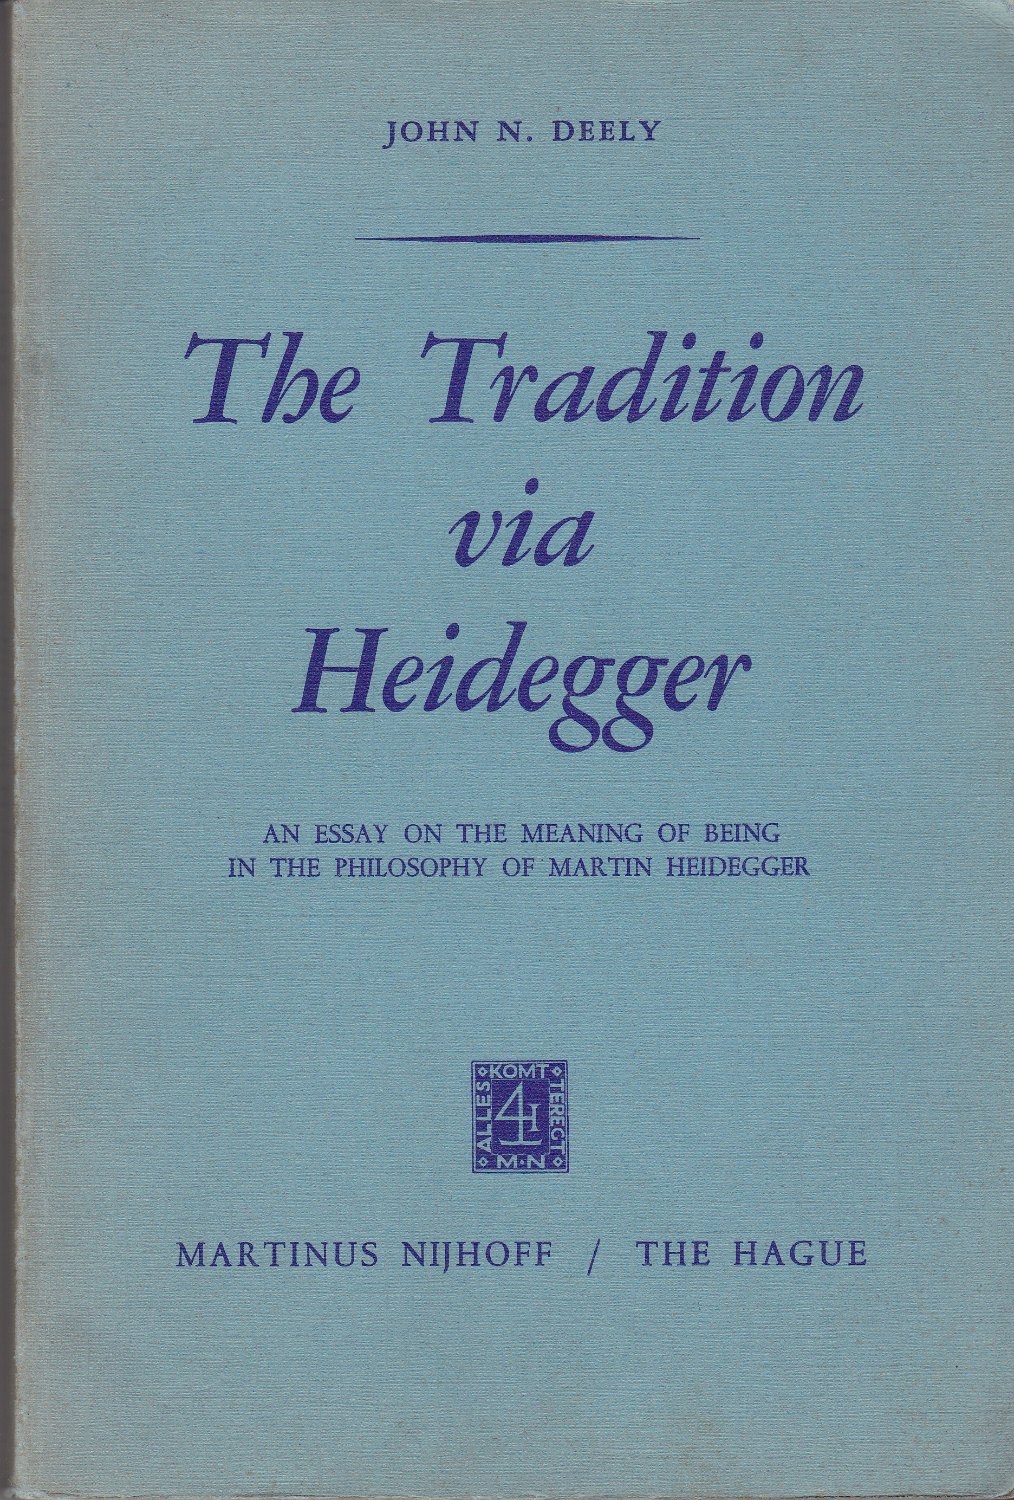 The tradition via Heidegger : an essay on the meaning of being in the philosophy of Martin Heidegger.